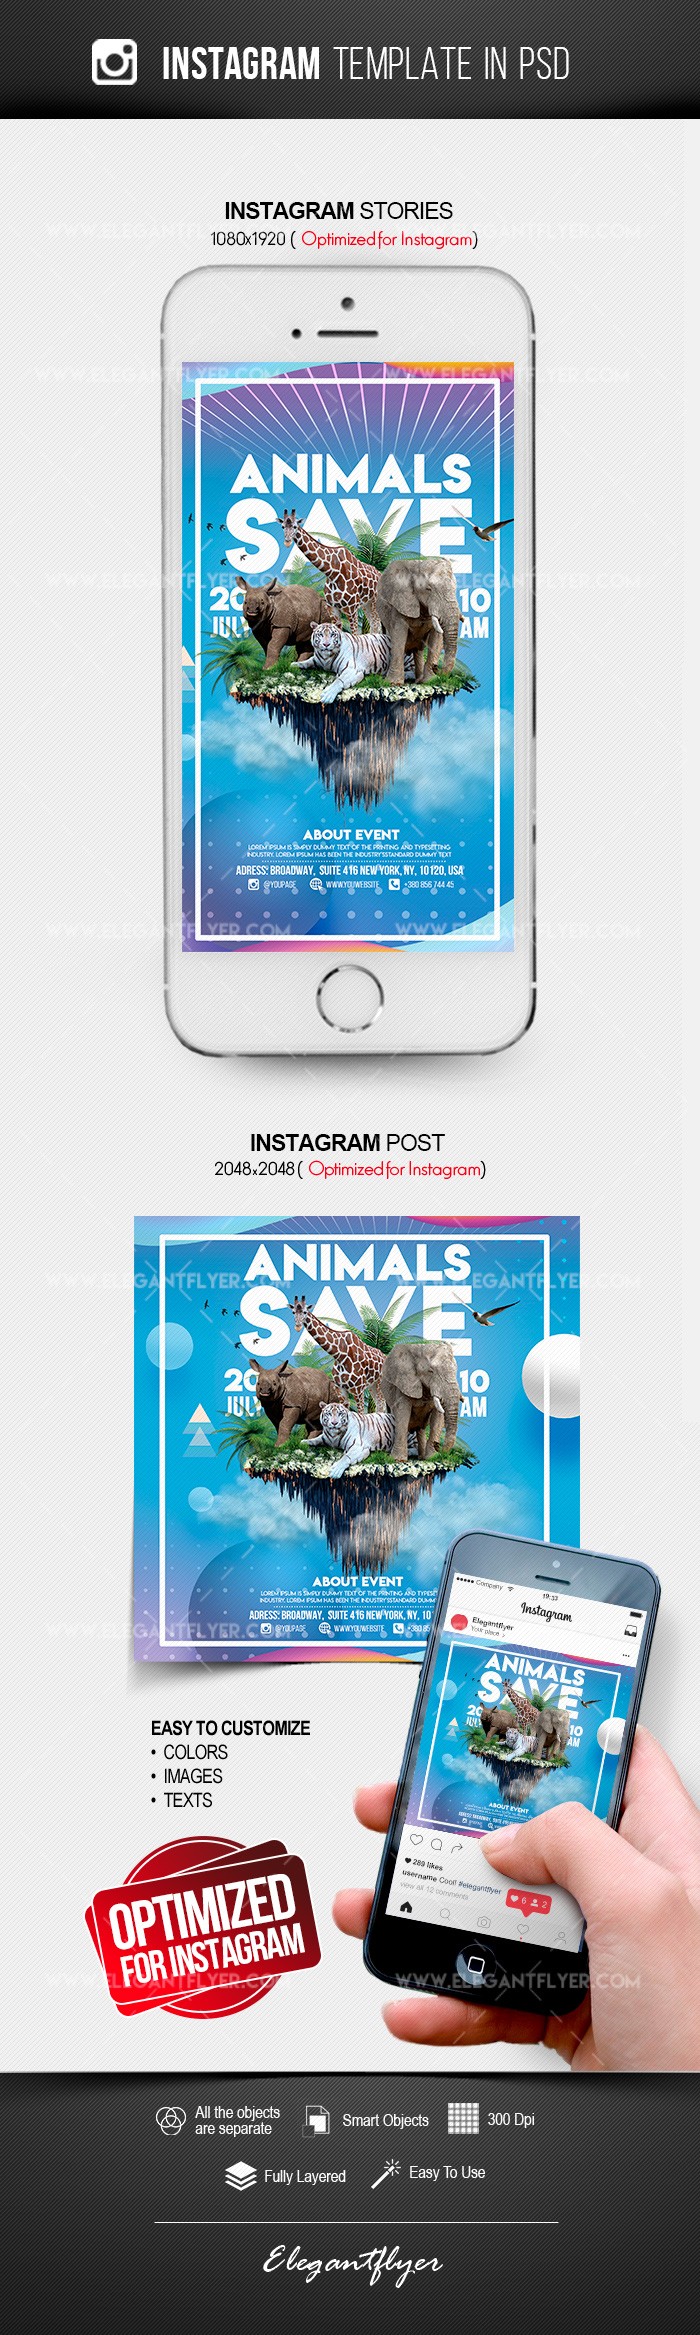 Save the Animals Instagram by ElegantFlyer